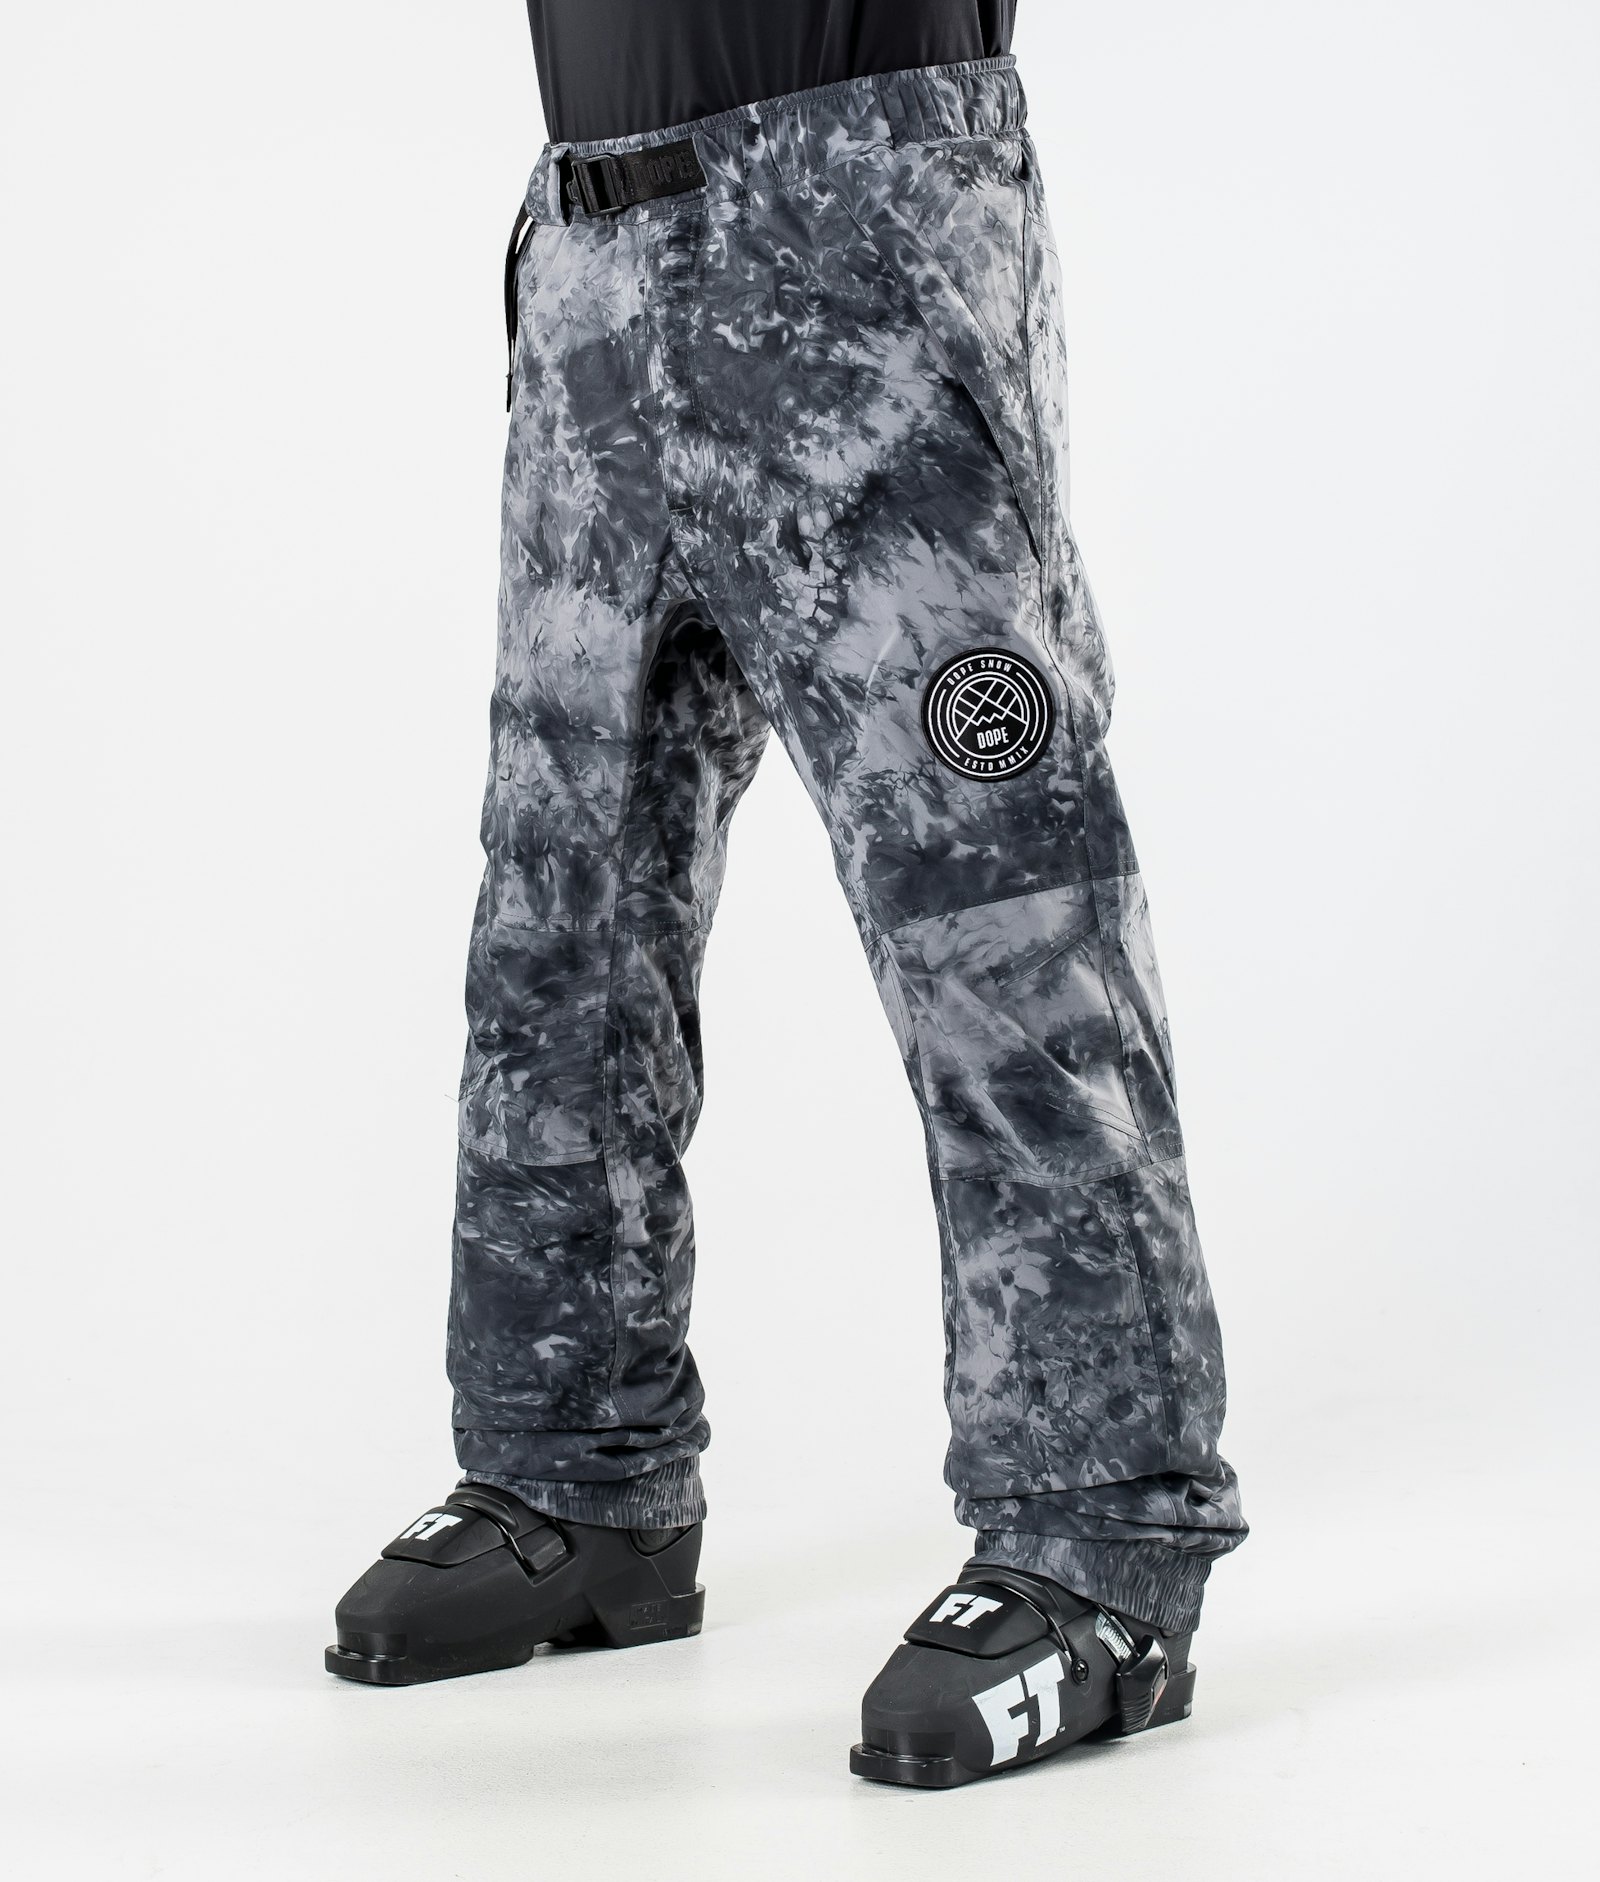 Blizzard 2020 Pantalones Esquí Hombre Limited Edition Tiedye